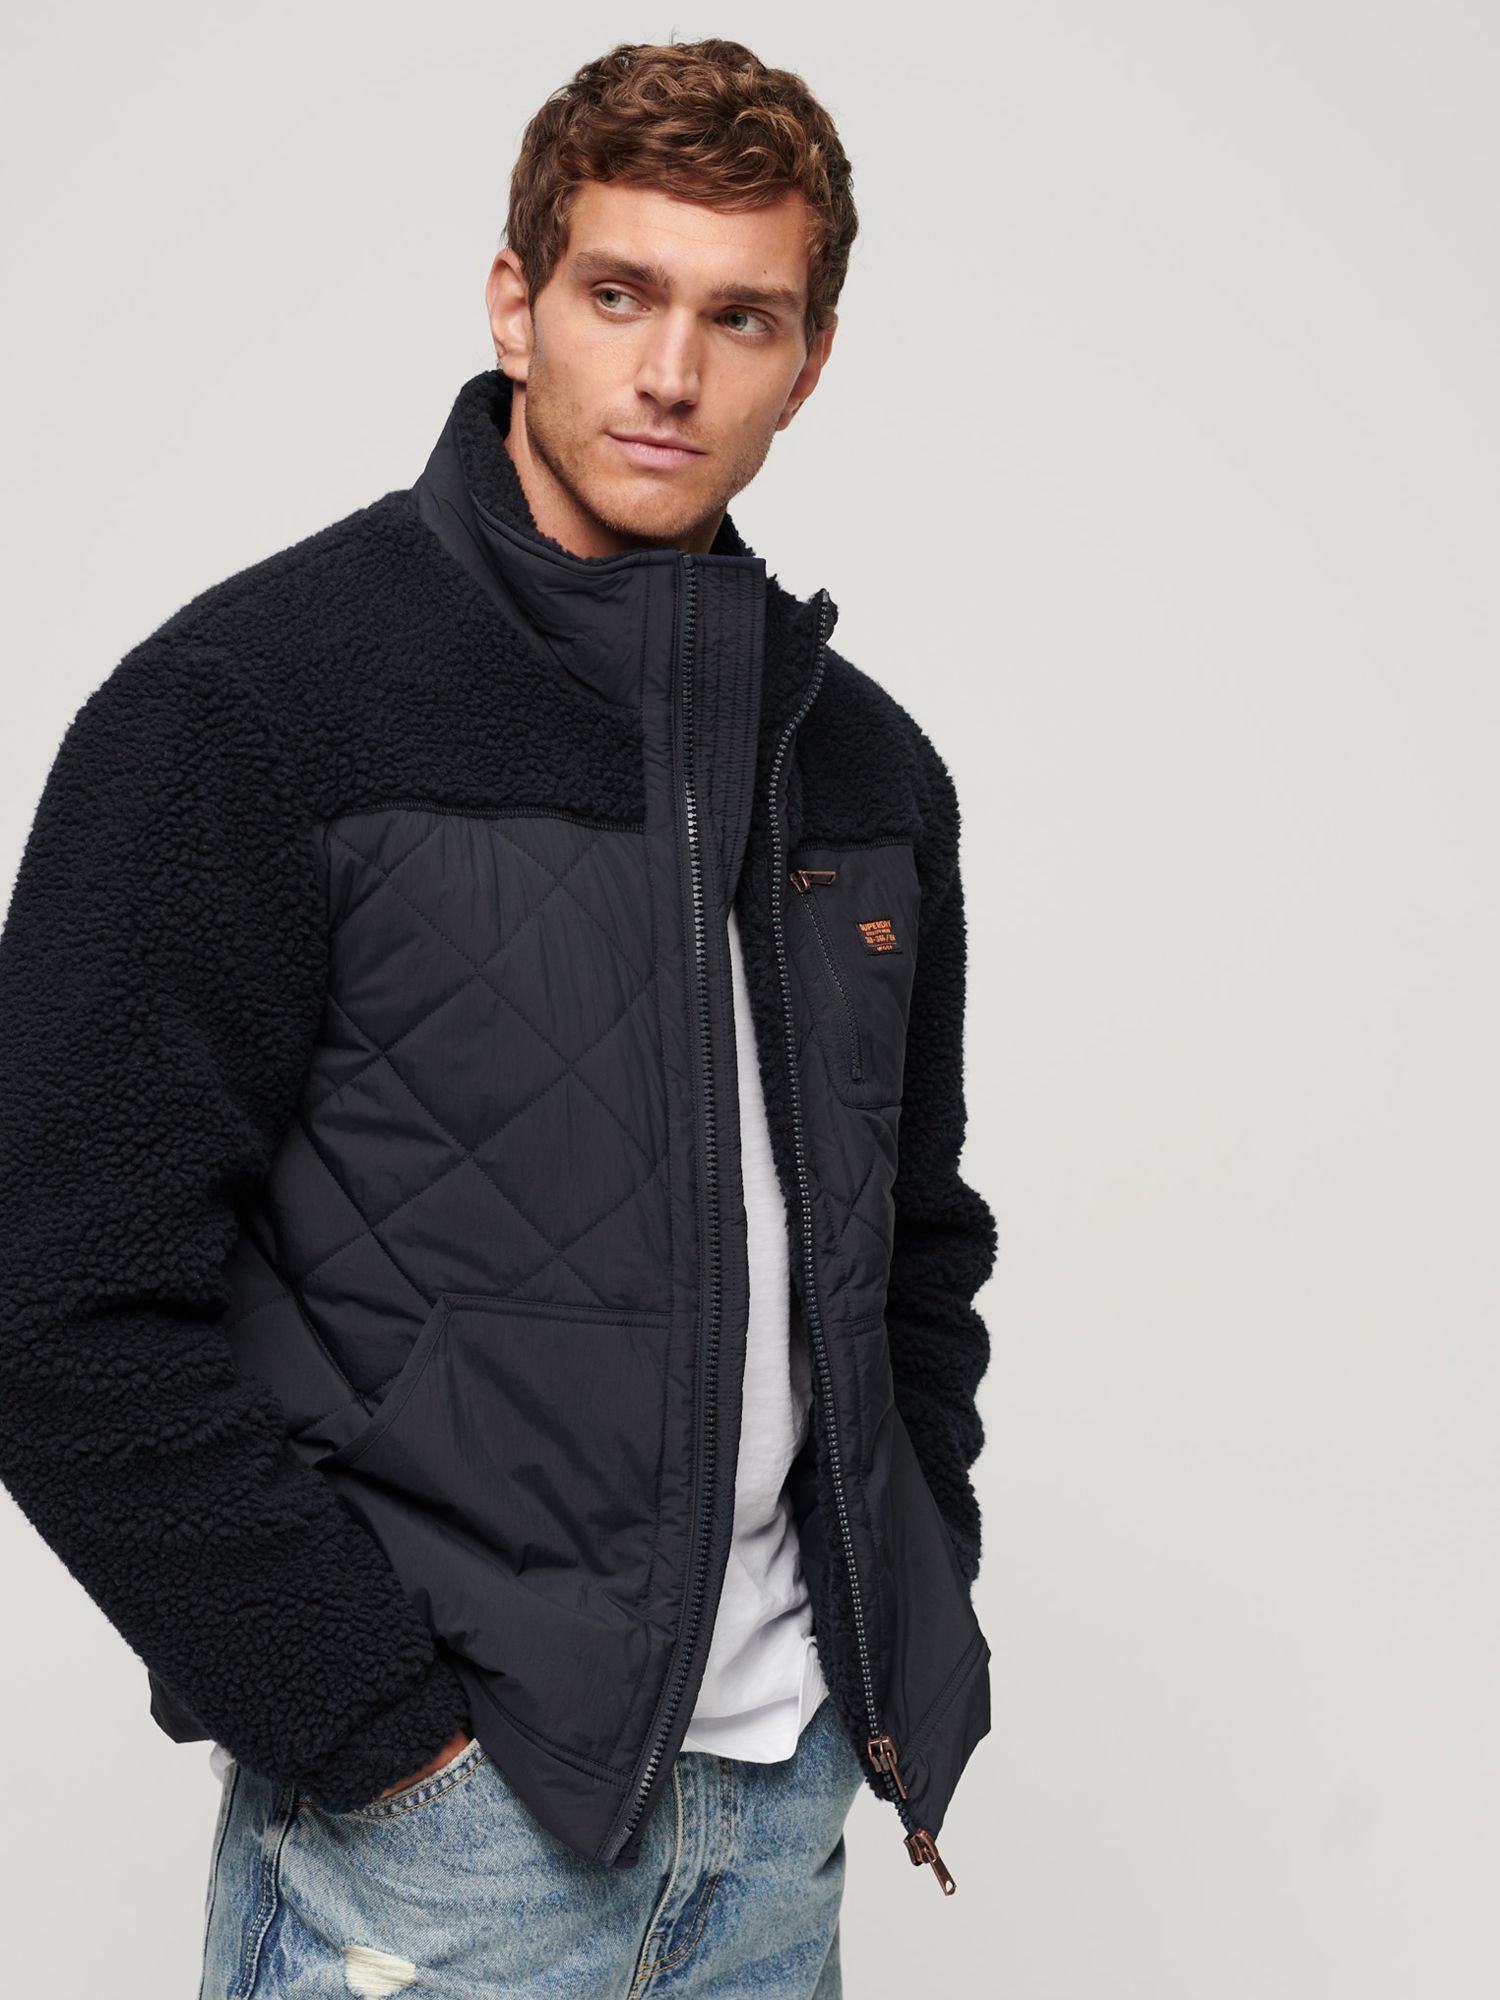 Superdry Sherpa Workwear Hybrid Jacket at John Lewis & Partners